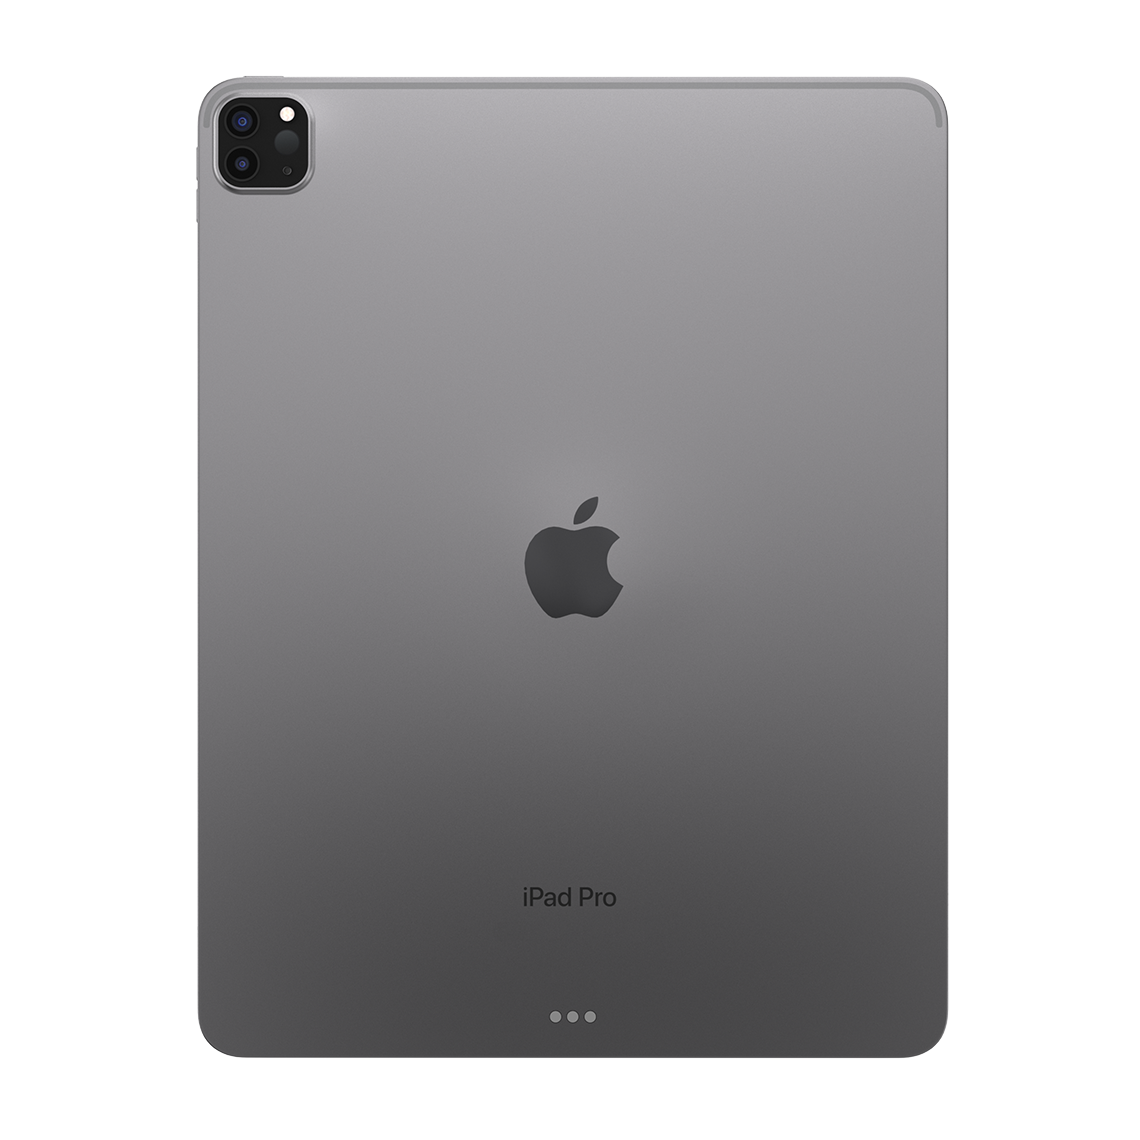 Apple iPad Pro 11-inch 4th Generation - Space Gray - 128GB, Wi-Fi, Grade A